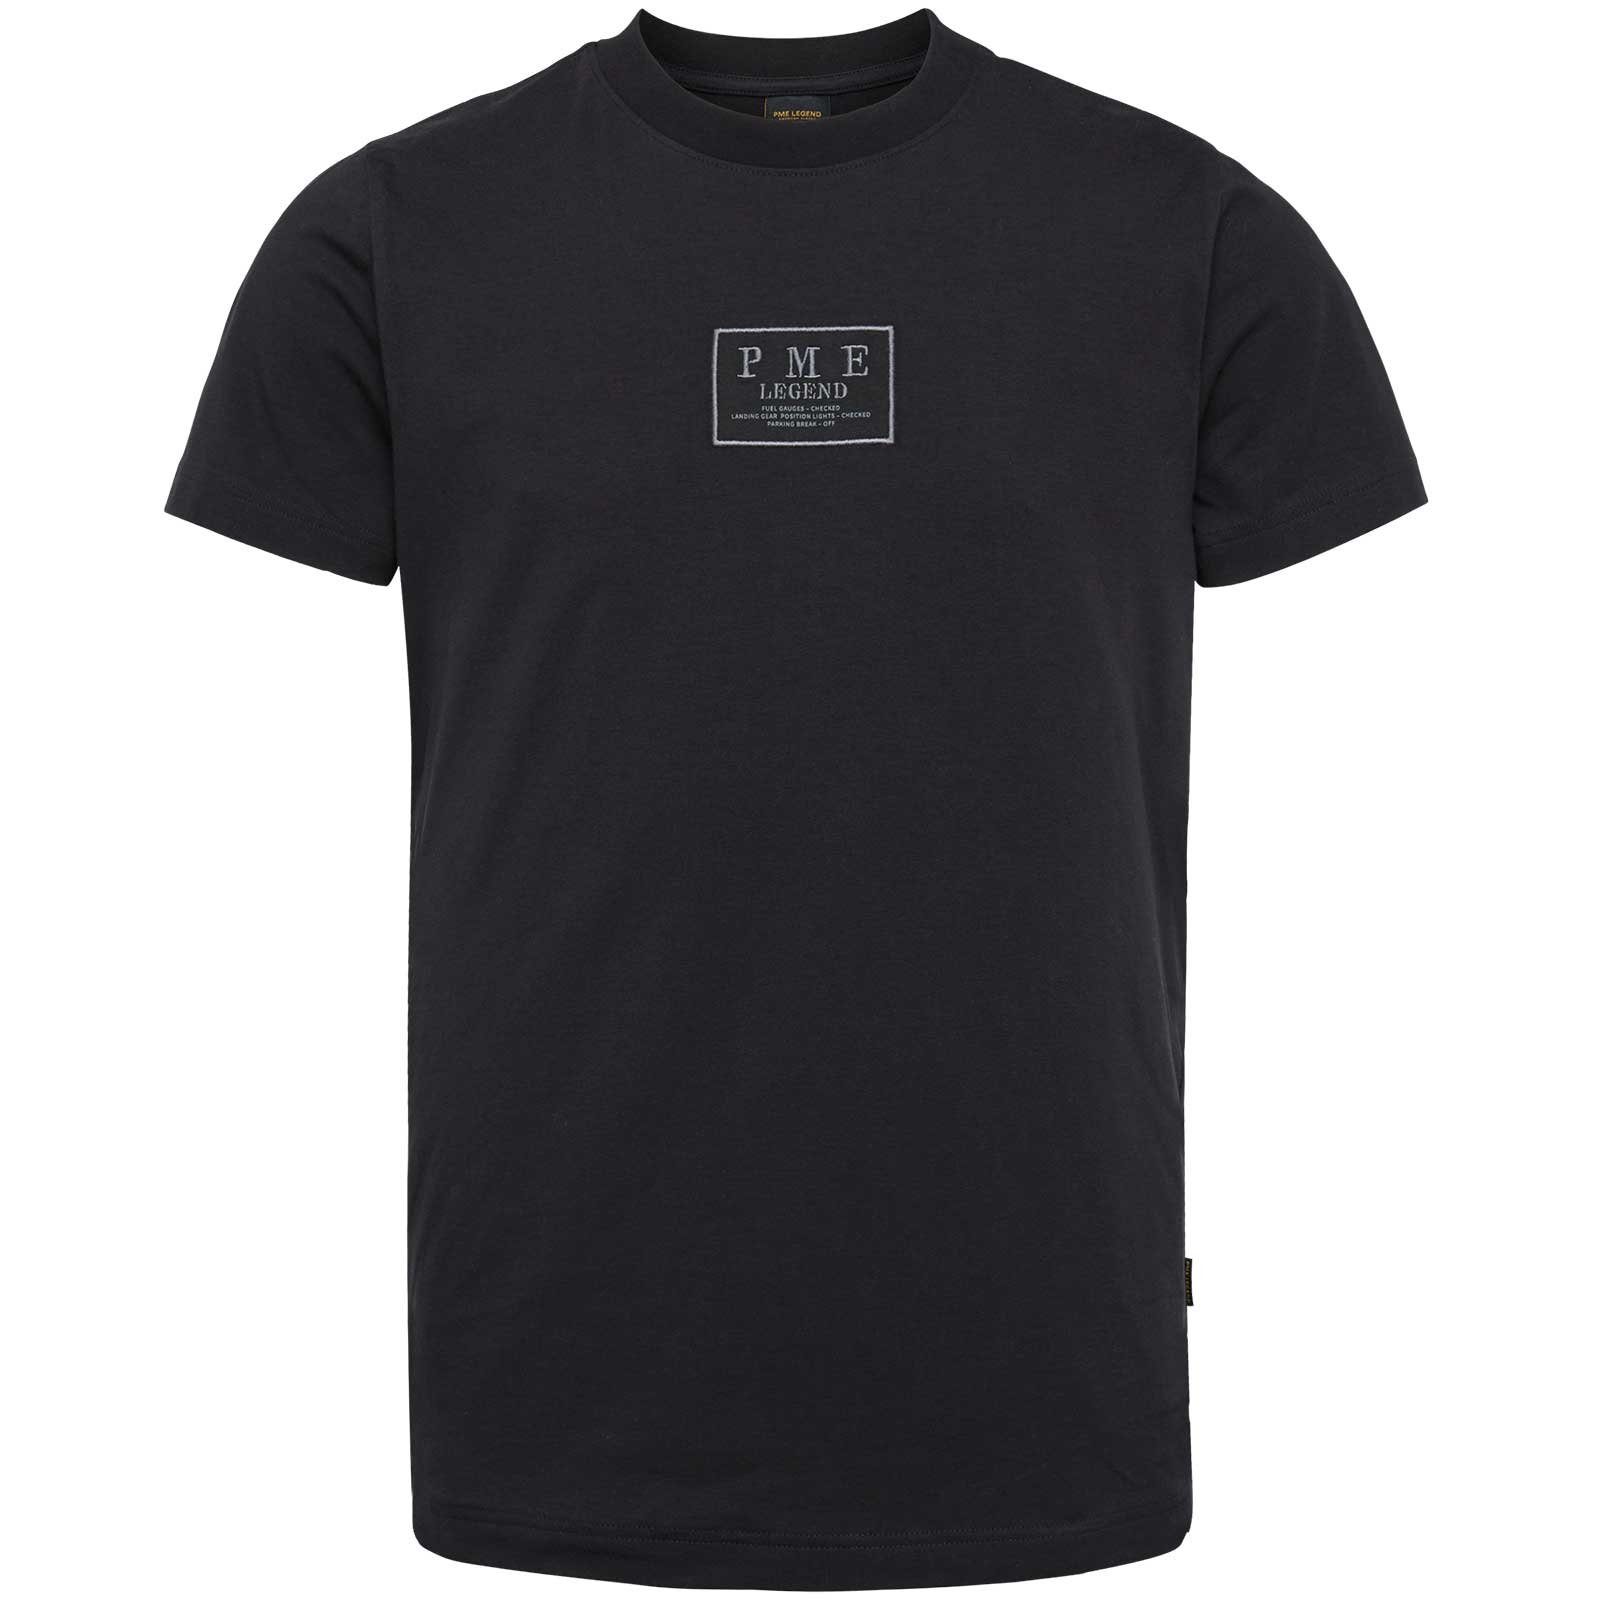 PME LEGEND T-Shirt Black